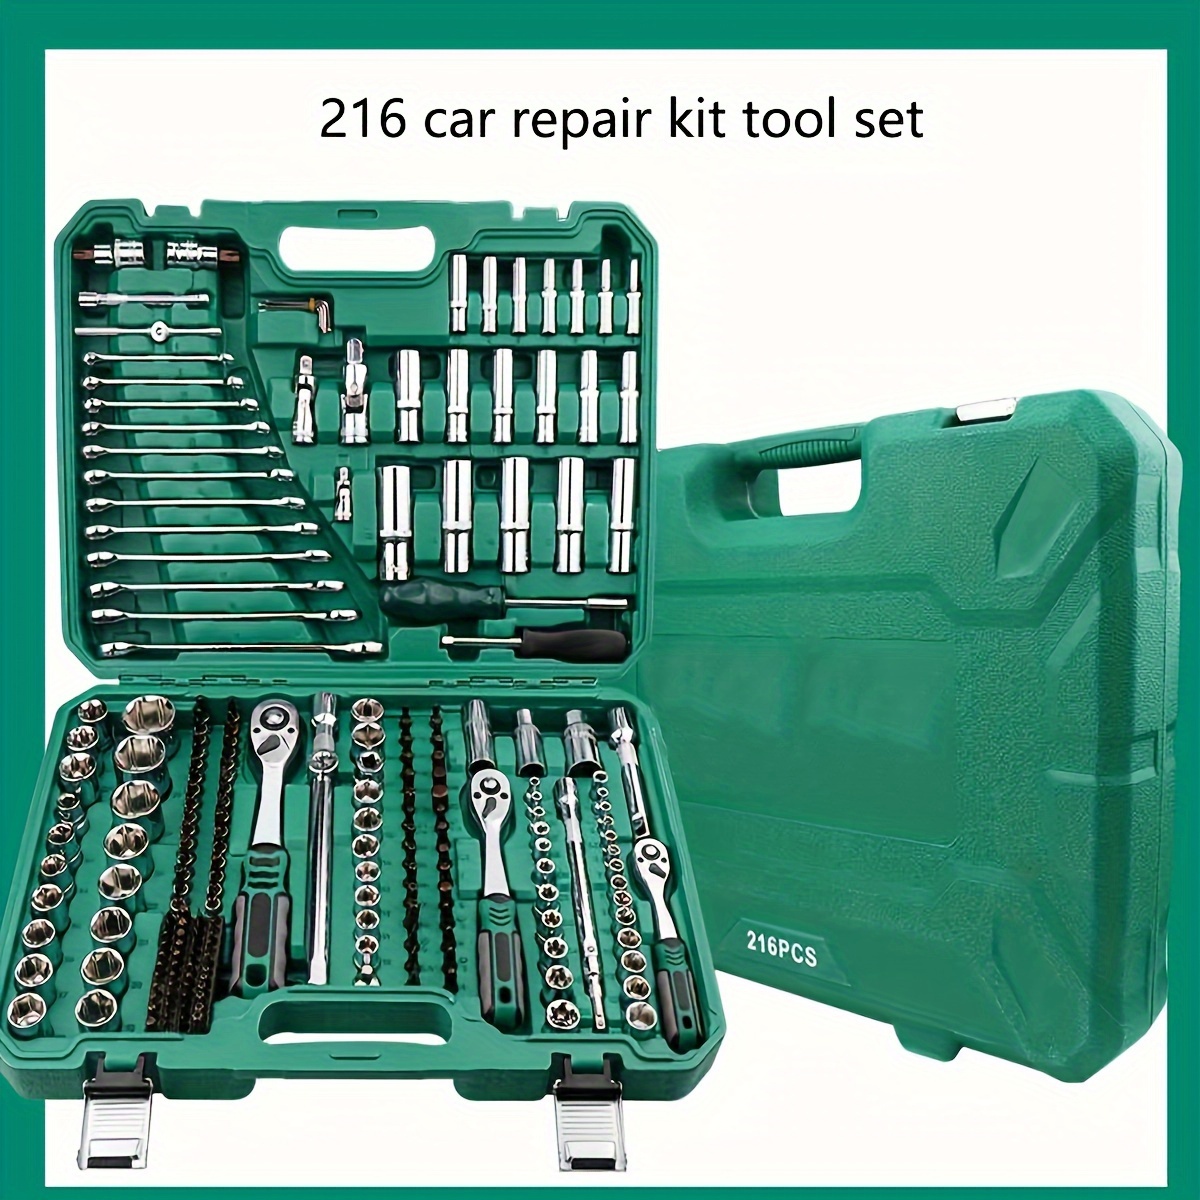 Mechanics Tool Kits, Tool Kits for Mechanics